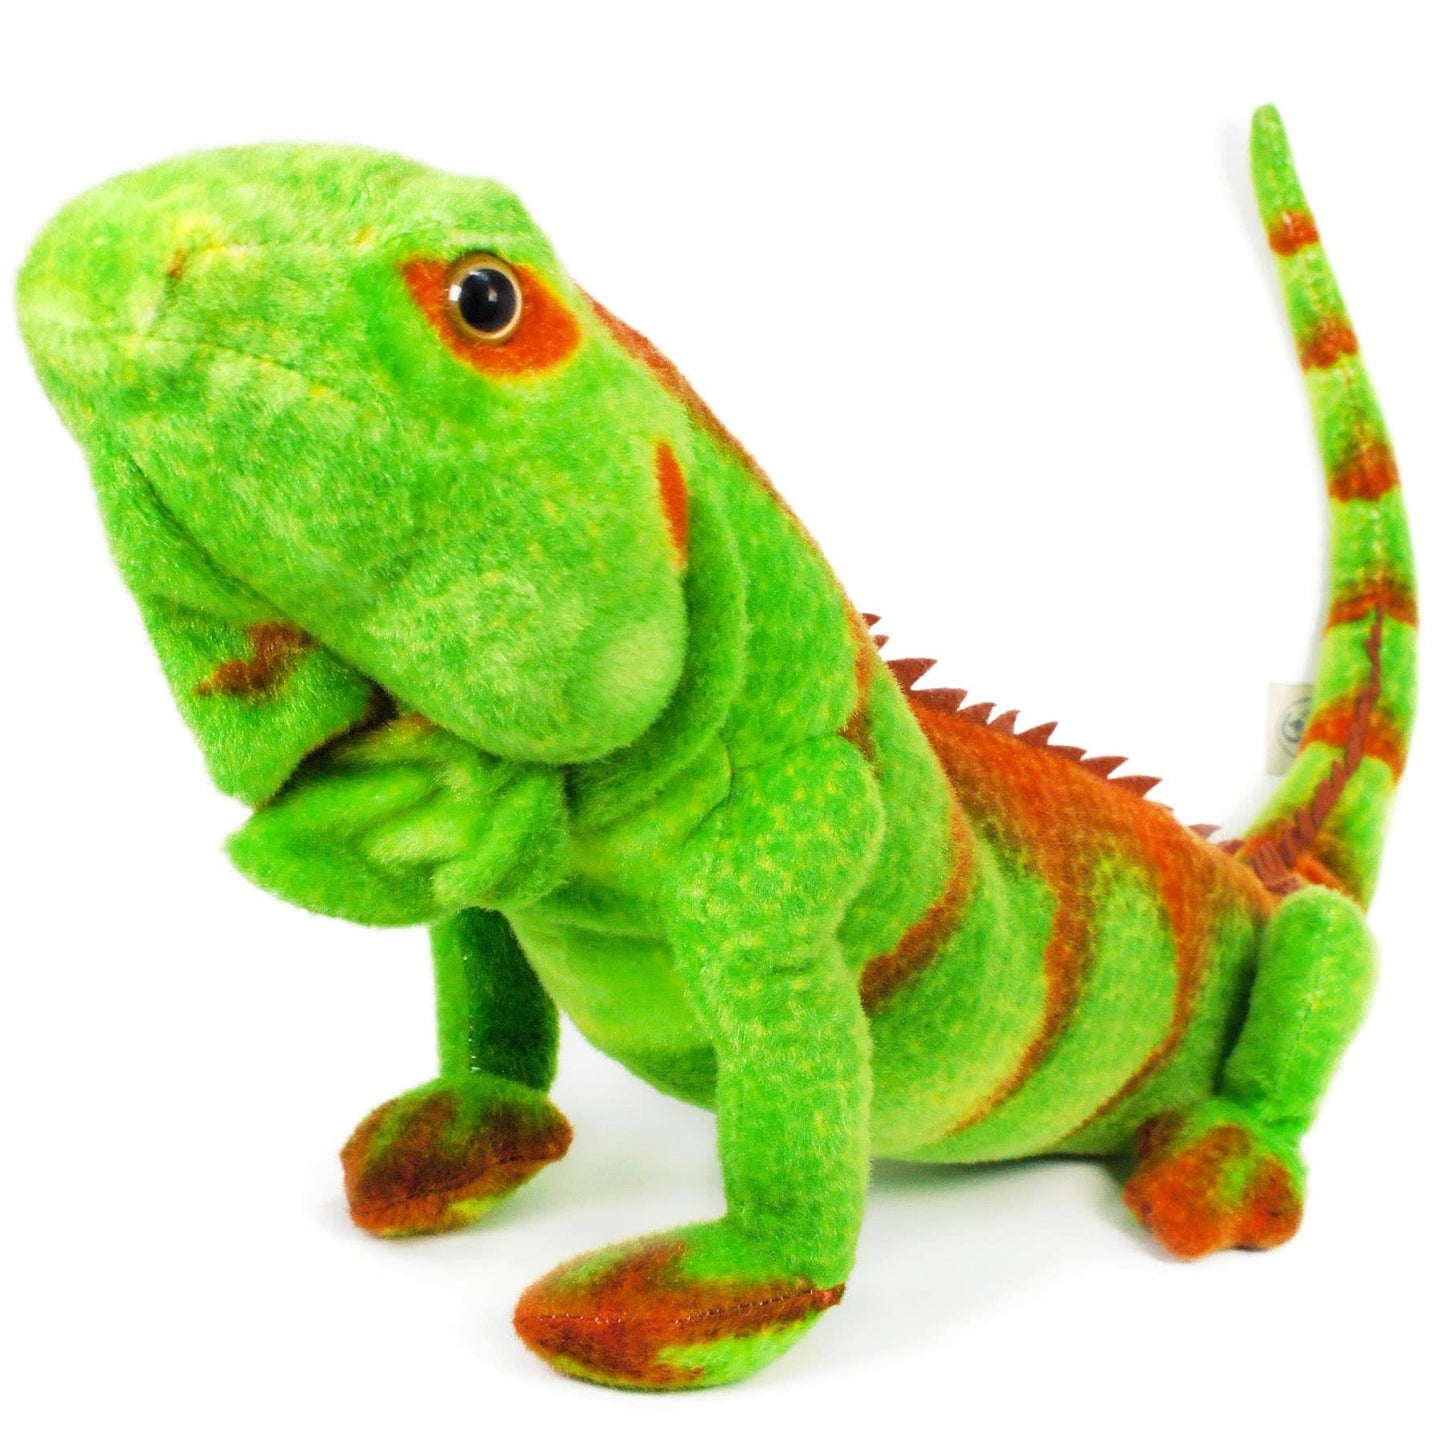 Iago The Iguana | Stuffed Animal Plush